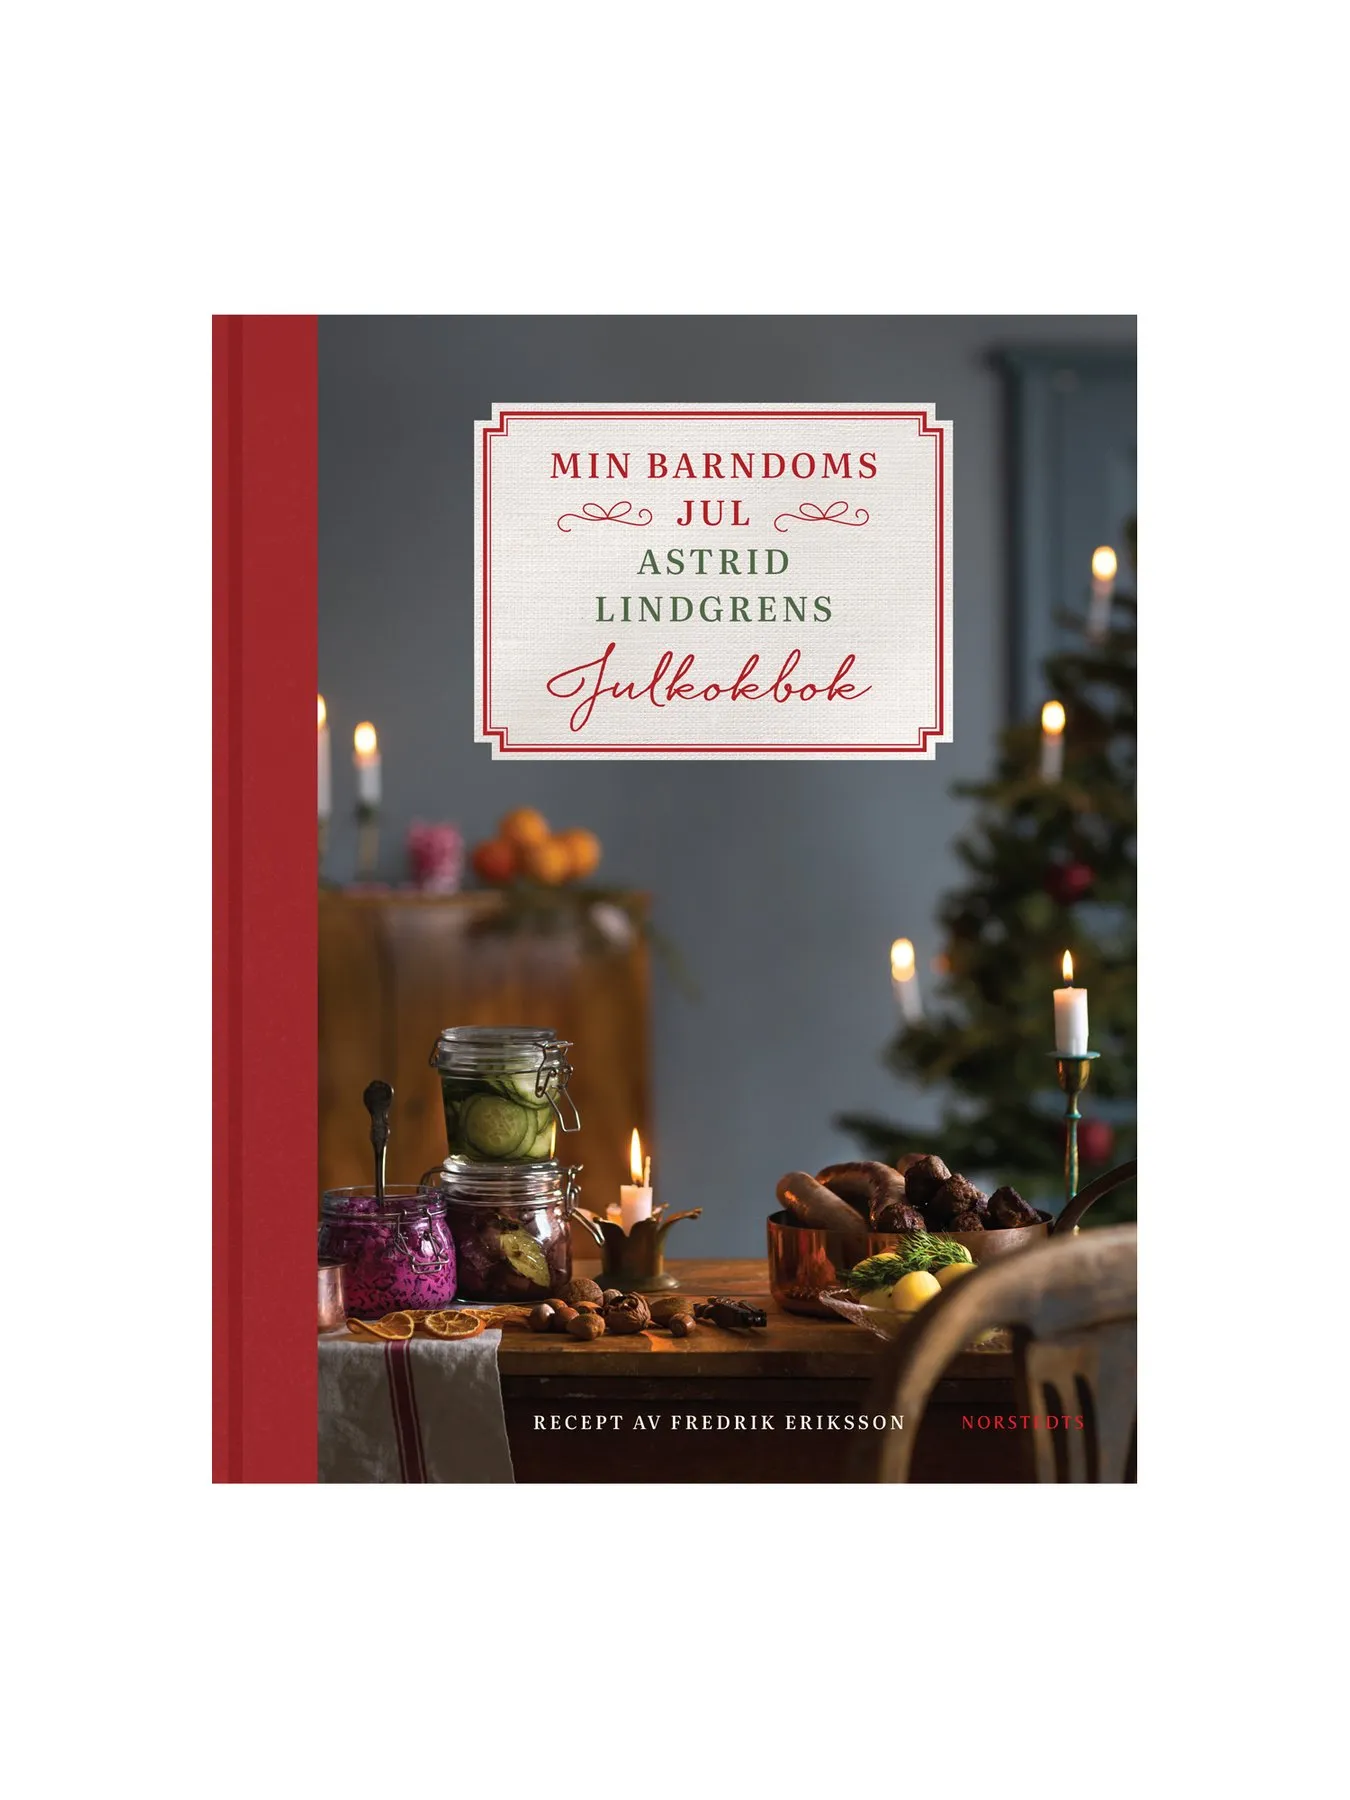 Min barndoms jul - Astrid Lindgrens julkokbok